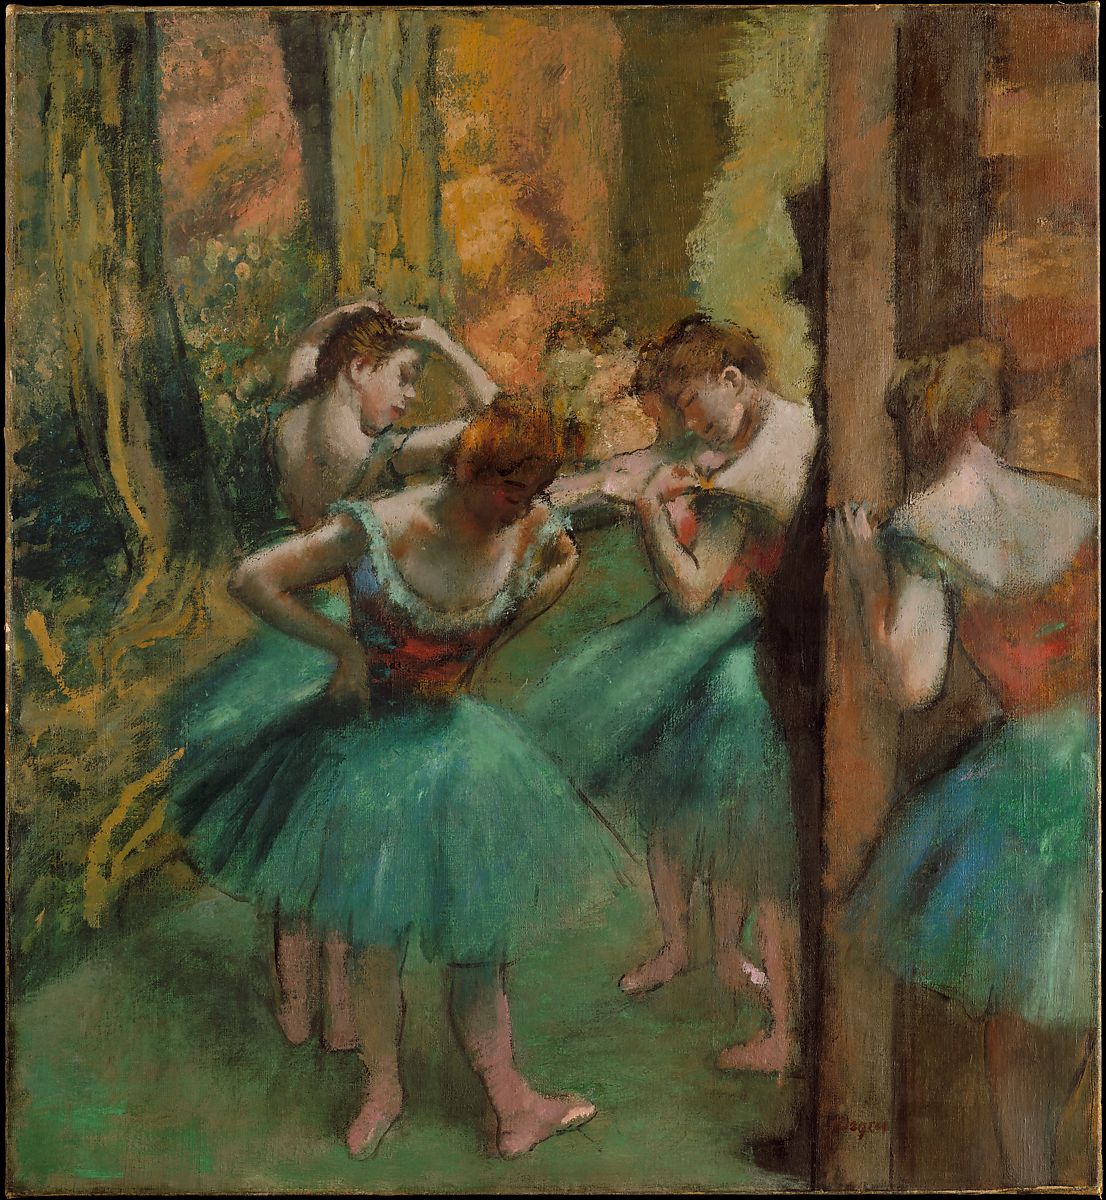 Dancers, Pink and Green, Edgar Degas